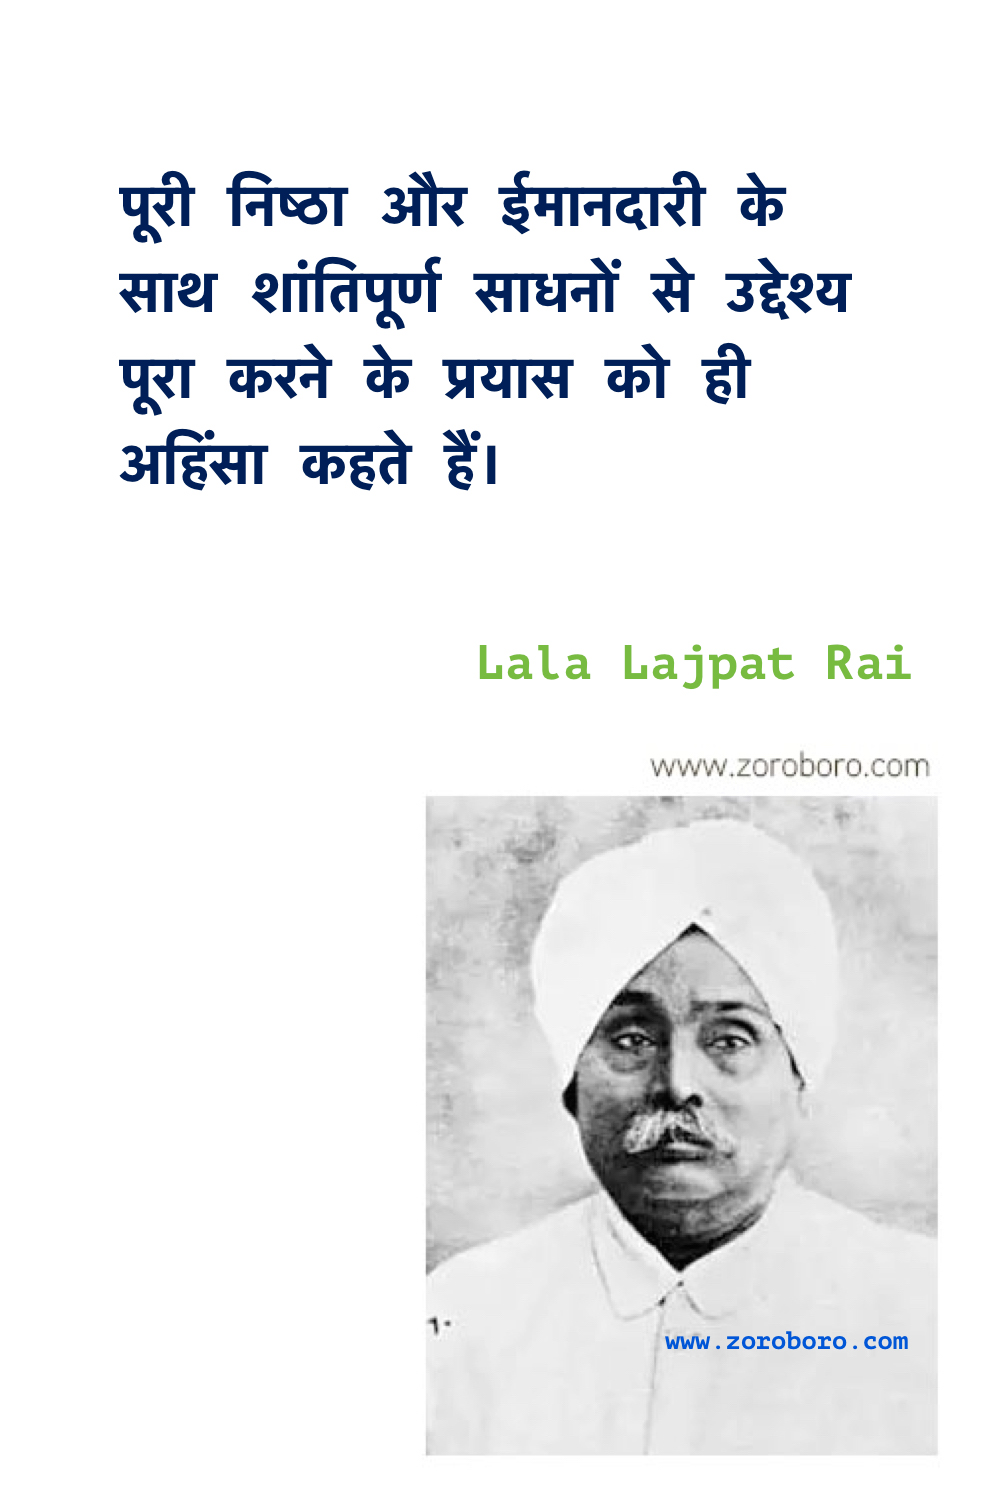 Lala Lajpat Rai Quotes, Lala Lajpat Rai Slogans Hindi, Lala Lajpat Rai Speech, Biography, Hindi Quotes and English / Freedom Fighter